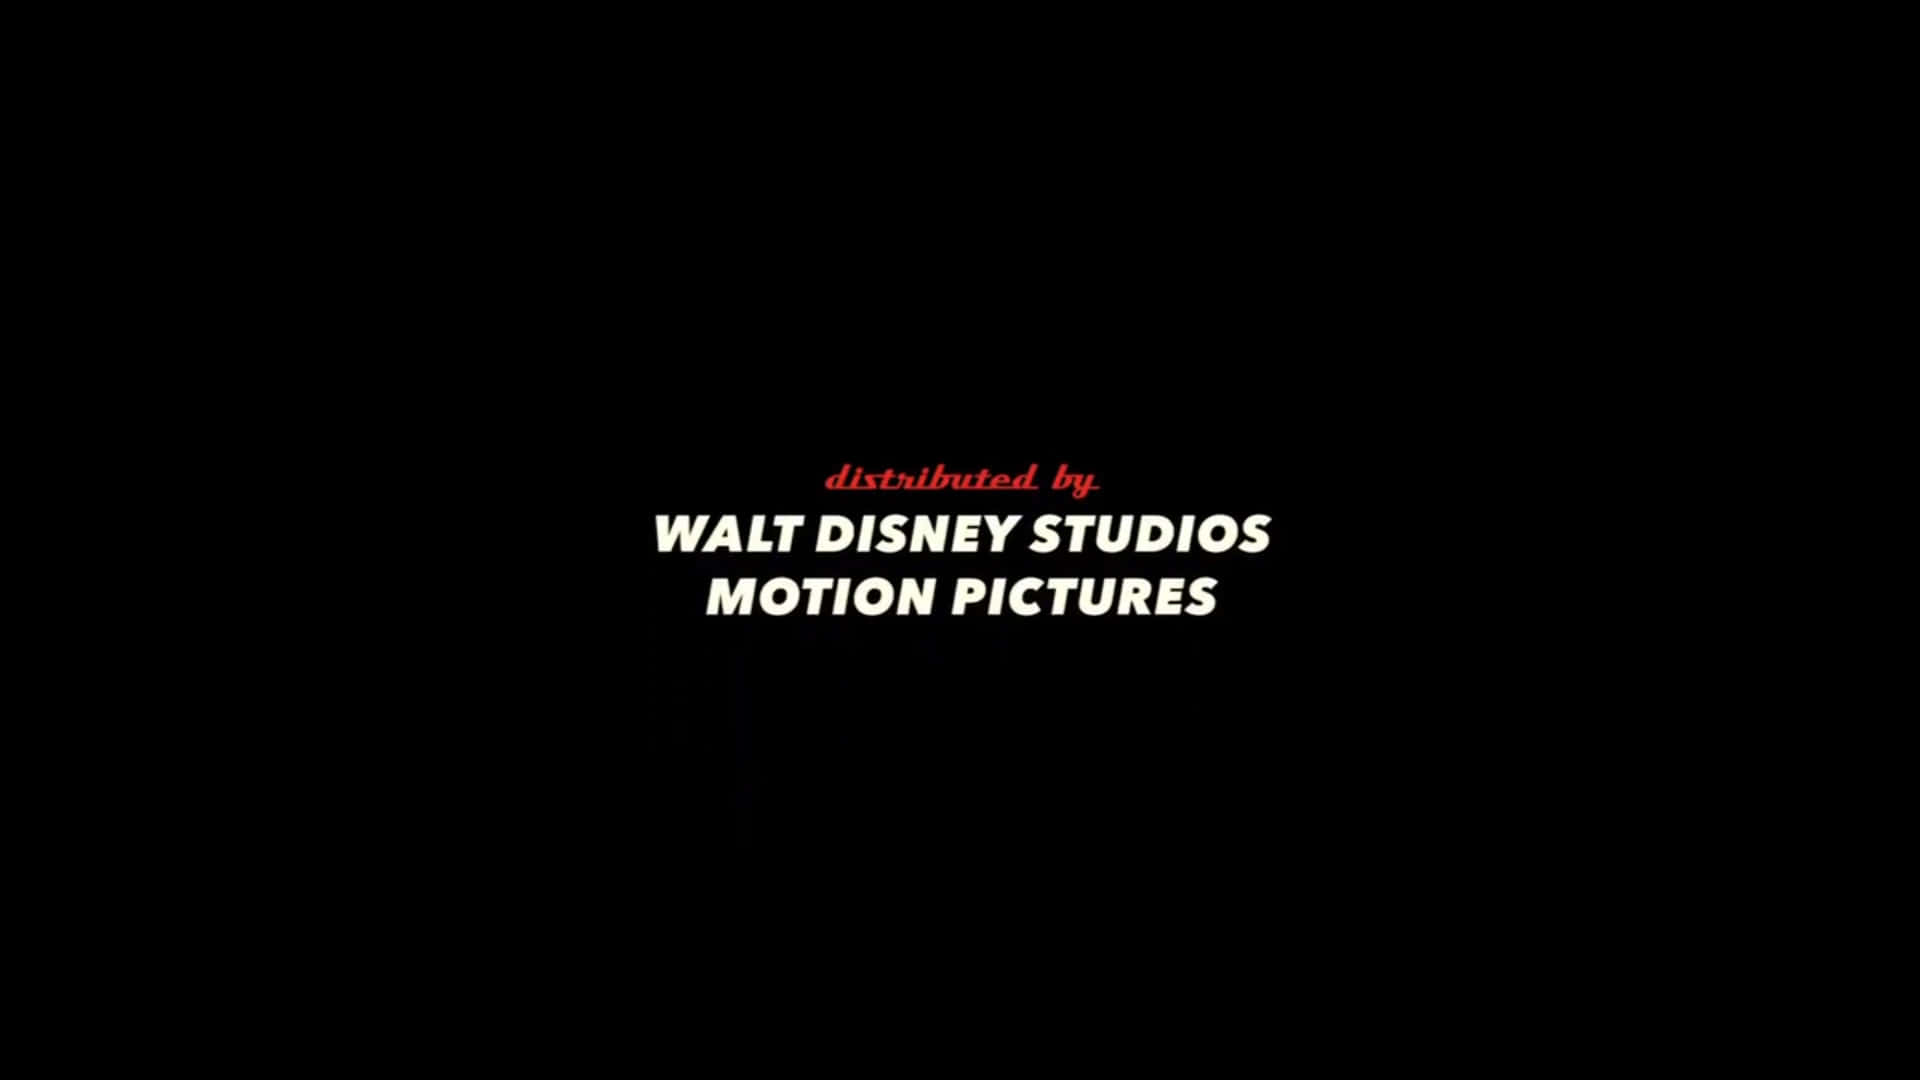 Waltdisney Studios Motion Pictures